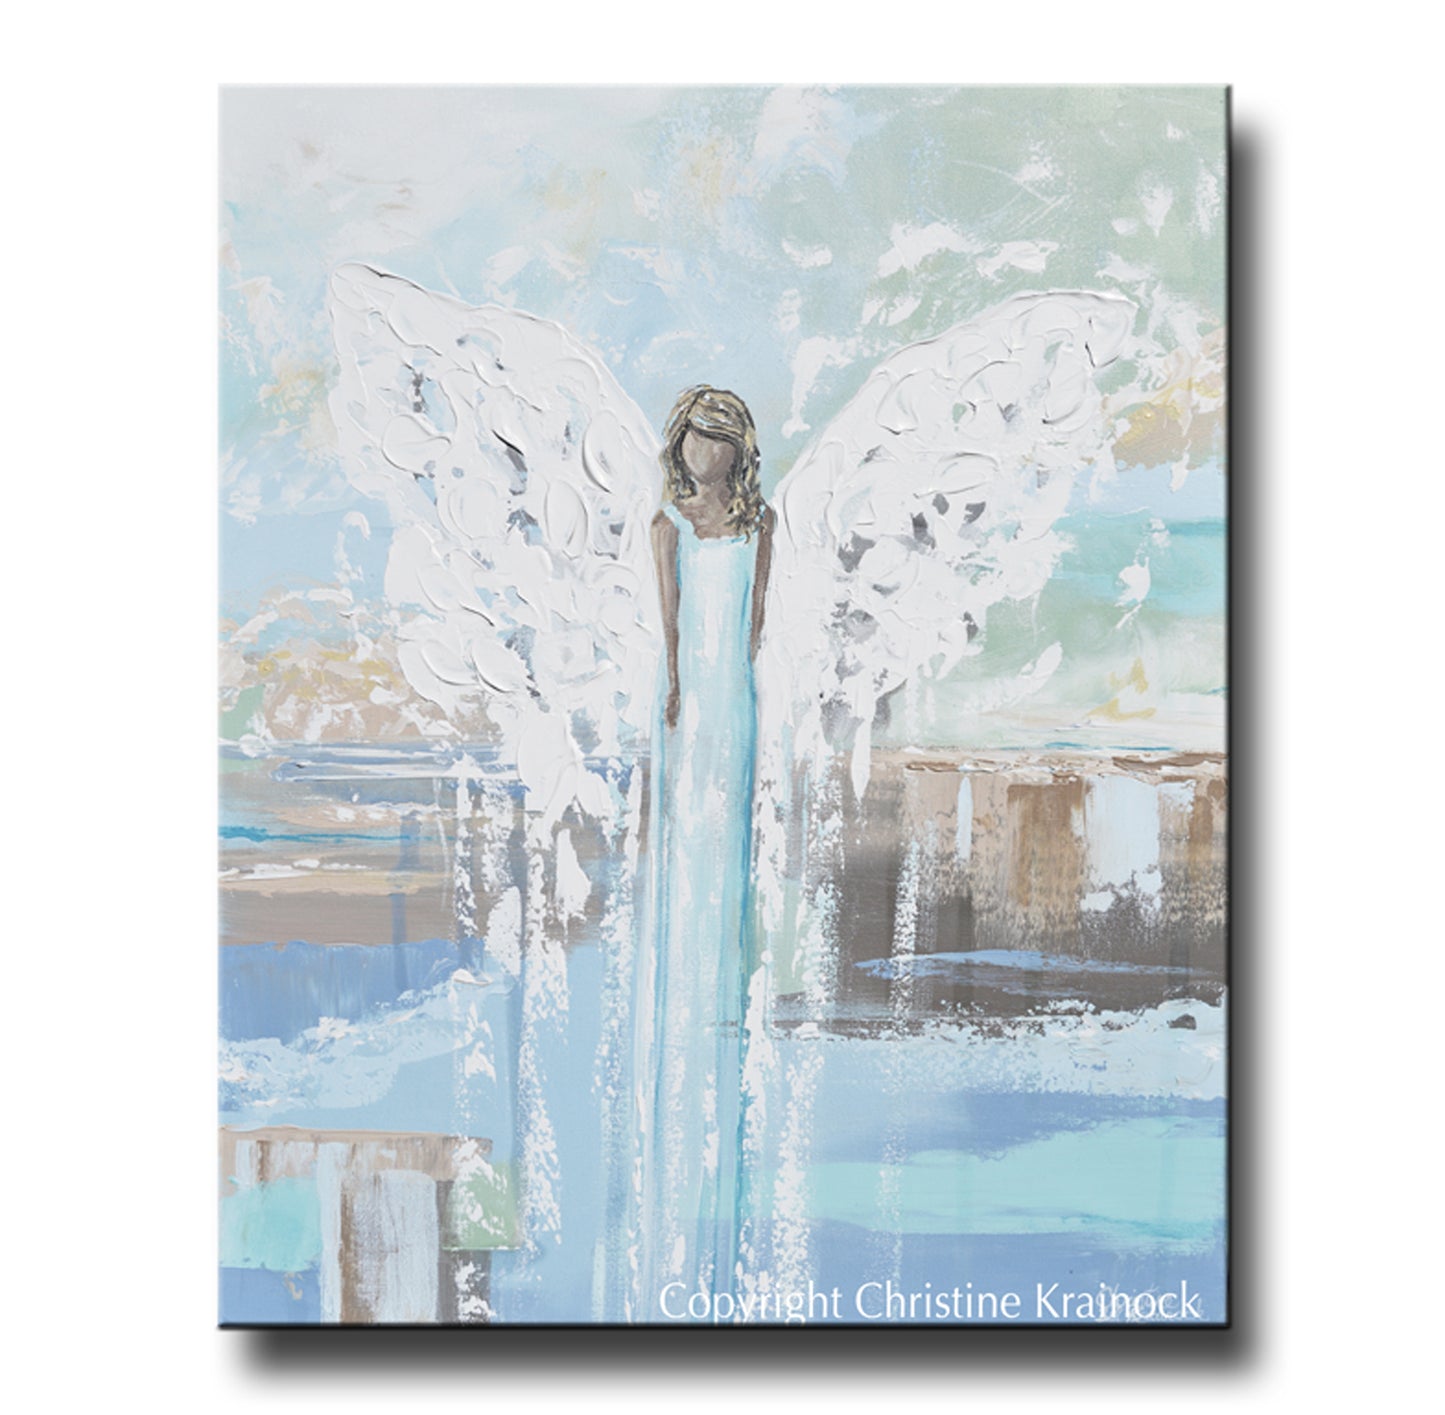 Archangel in Paper Clay - WetCanvas: Online Living for Artists